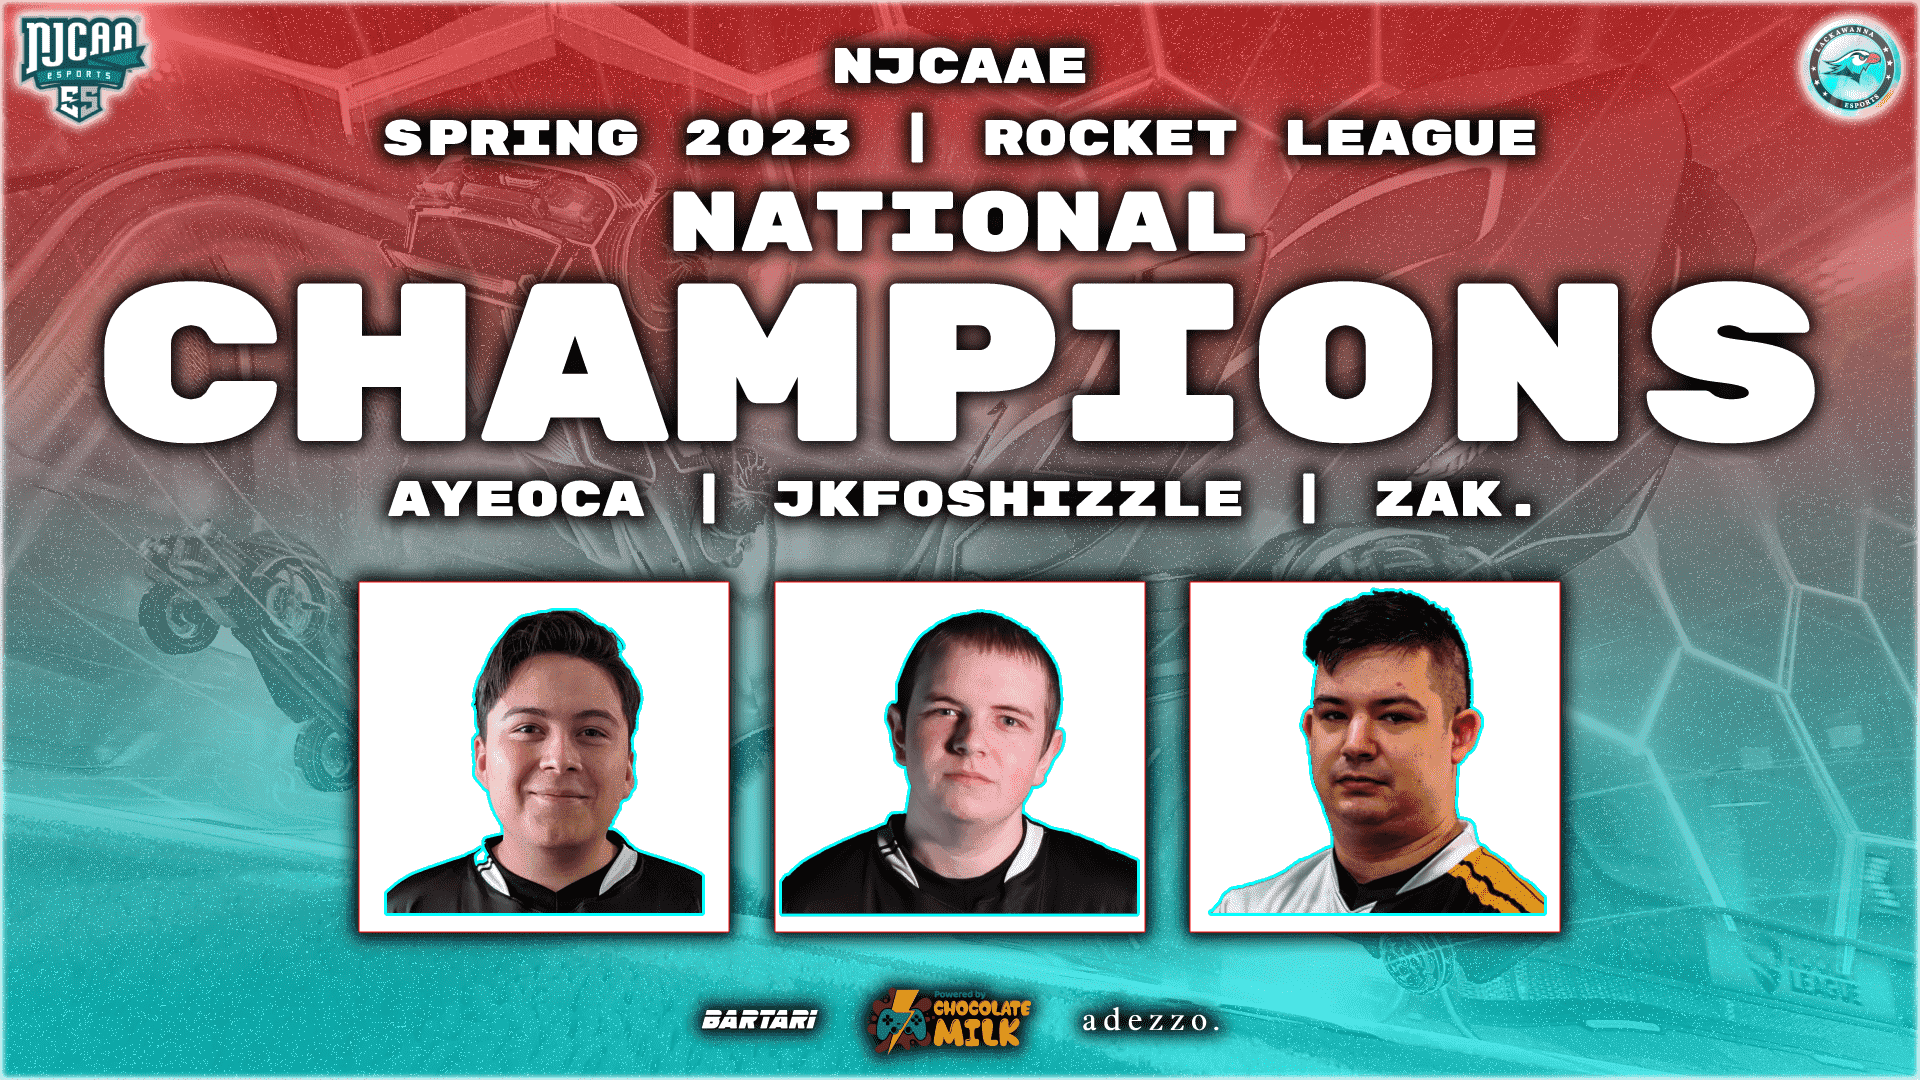 NJCAAE Spring 2023 Rocket League National Champions - Ayecoa, Jkfoshizzle, Zak.